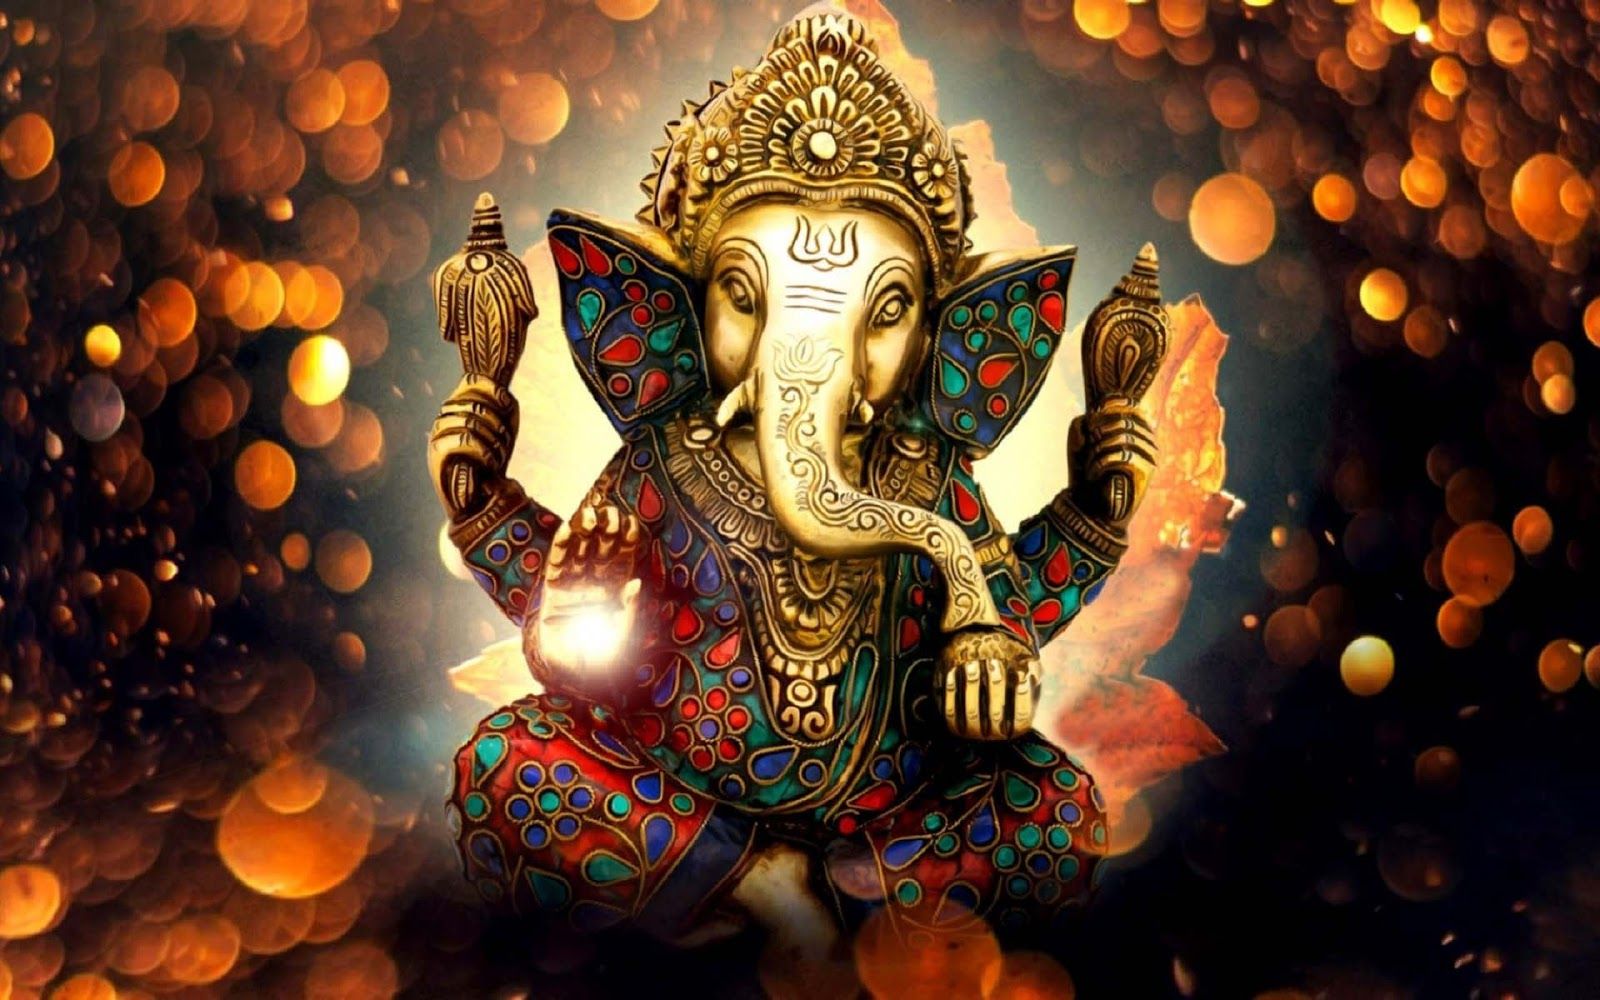 2020} Shri Ganesh Wallpaper HD, Best 2020 Collection On Web